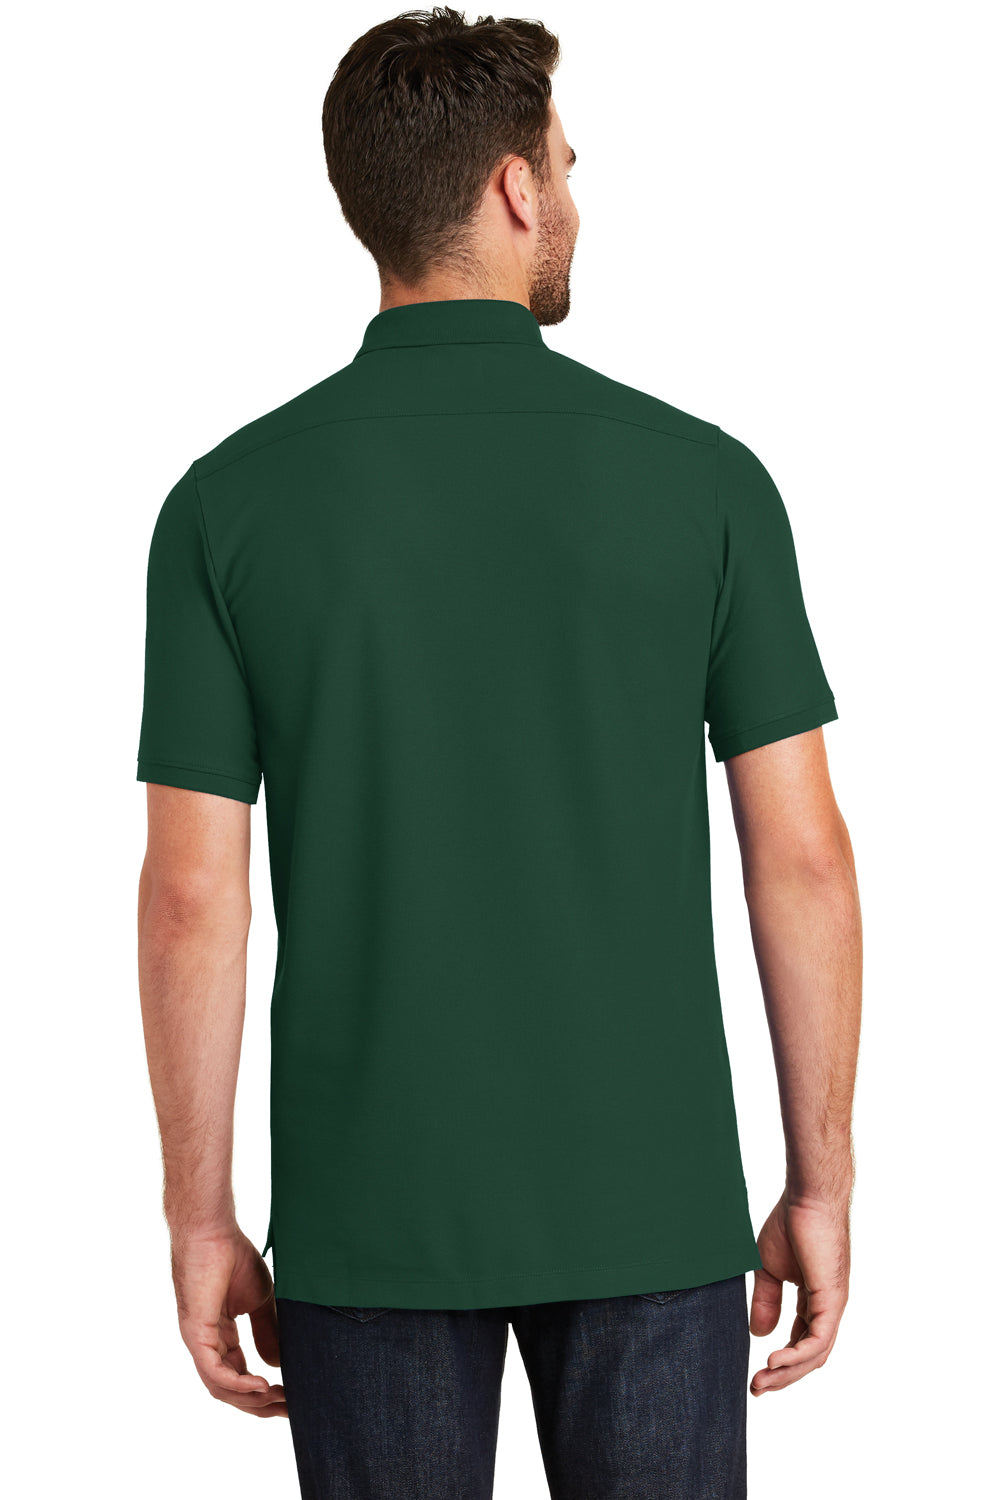 New Era NEA300 Mens Venue Home Plate Moisture Wicking Short Sleeve Polo Shirt Forest Green Back